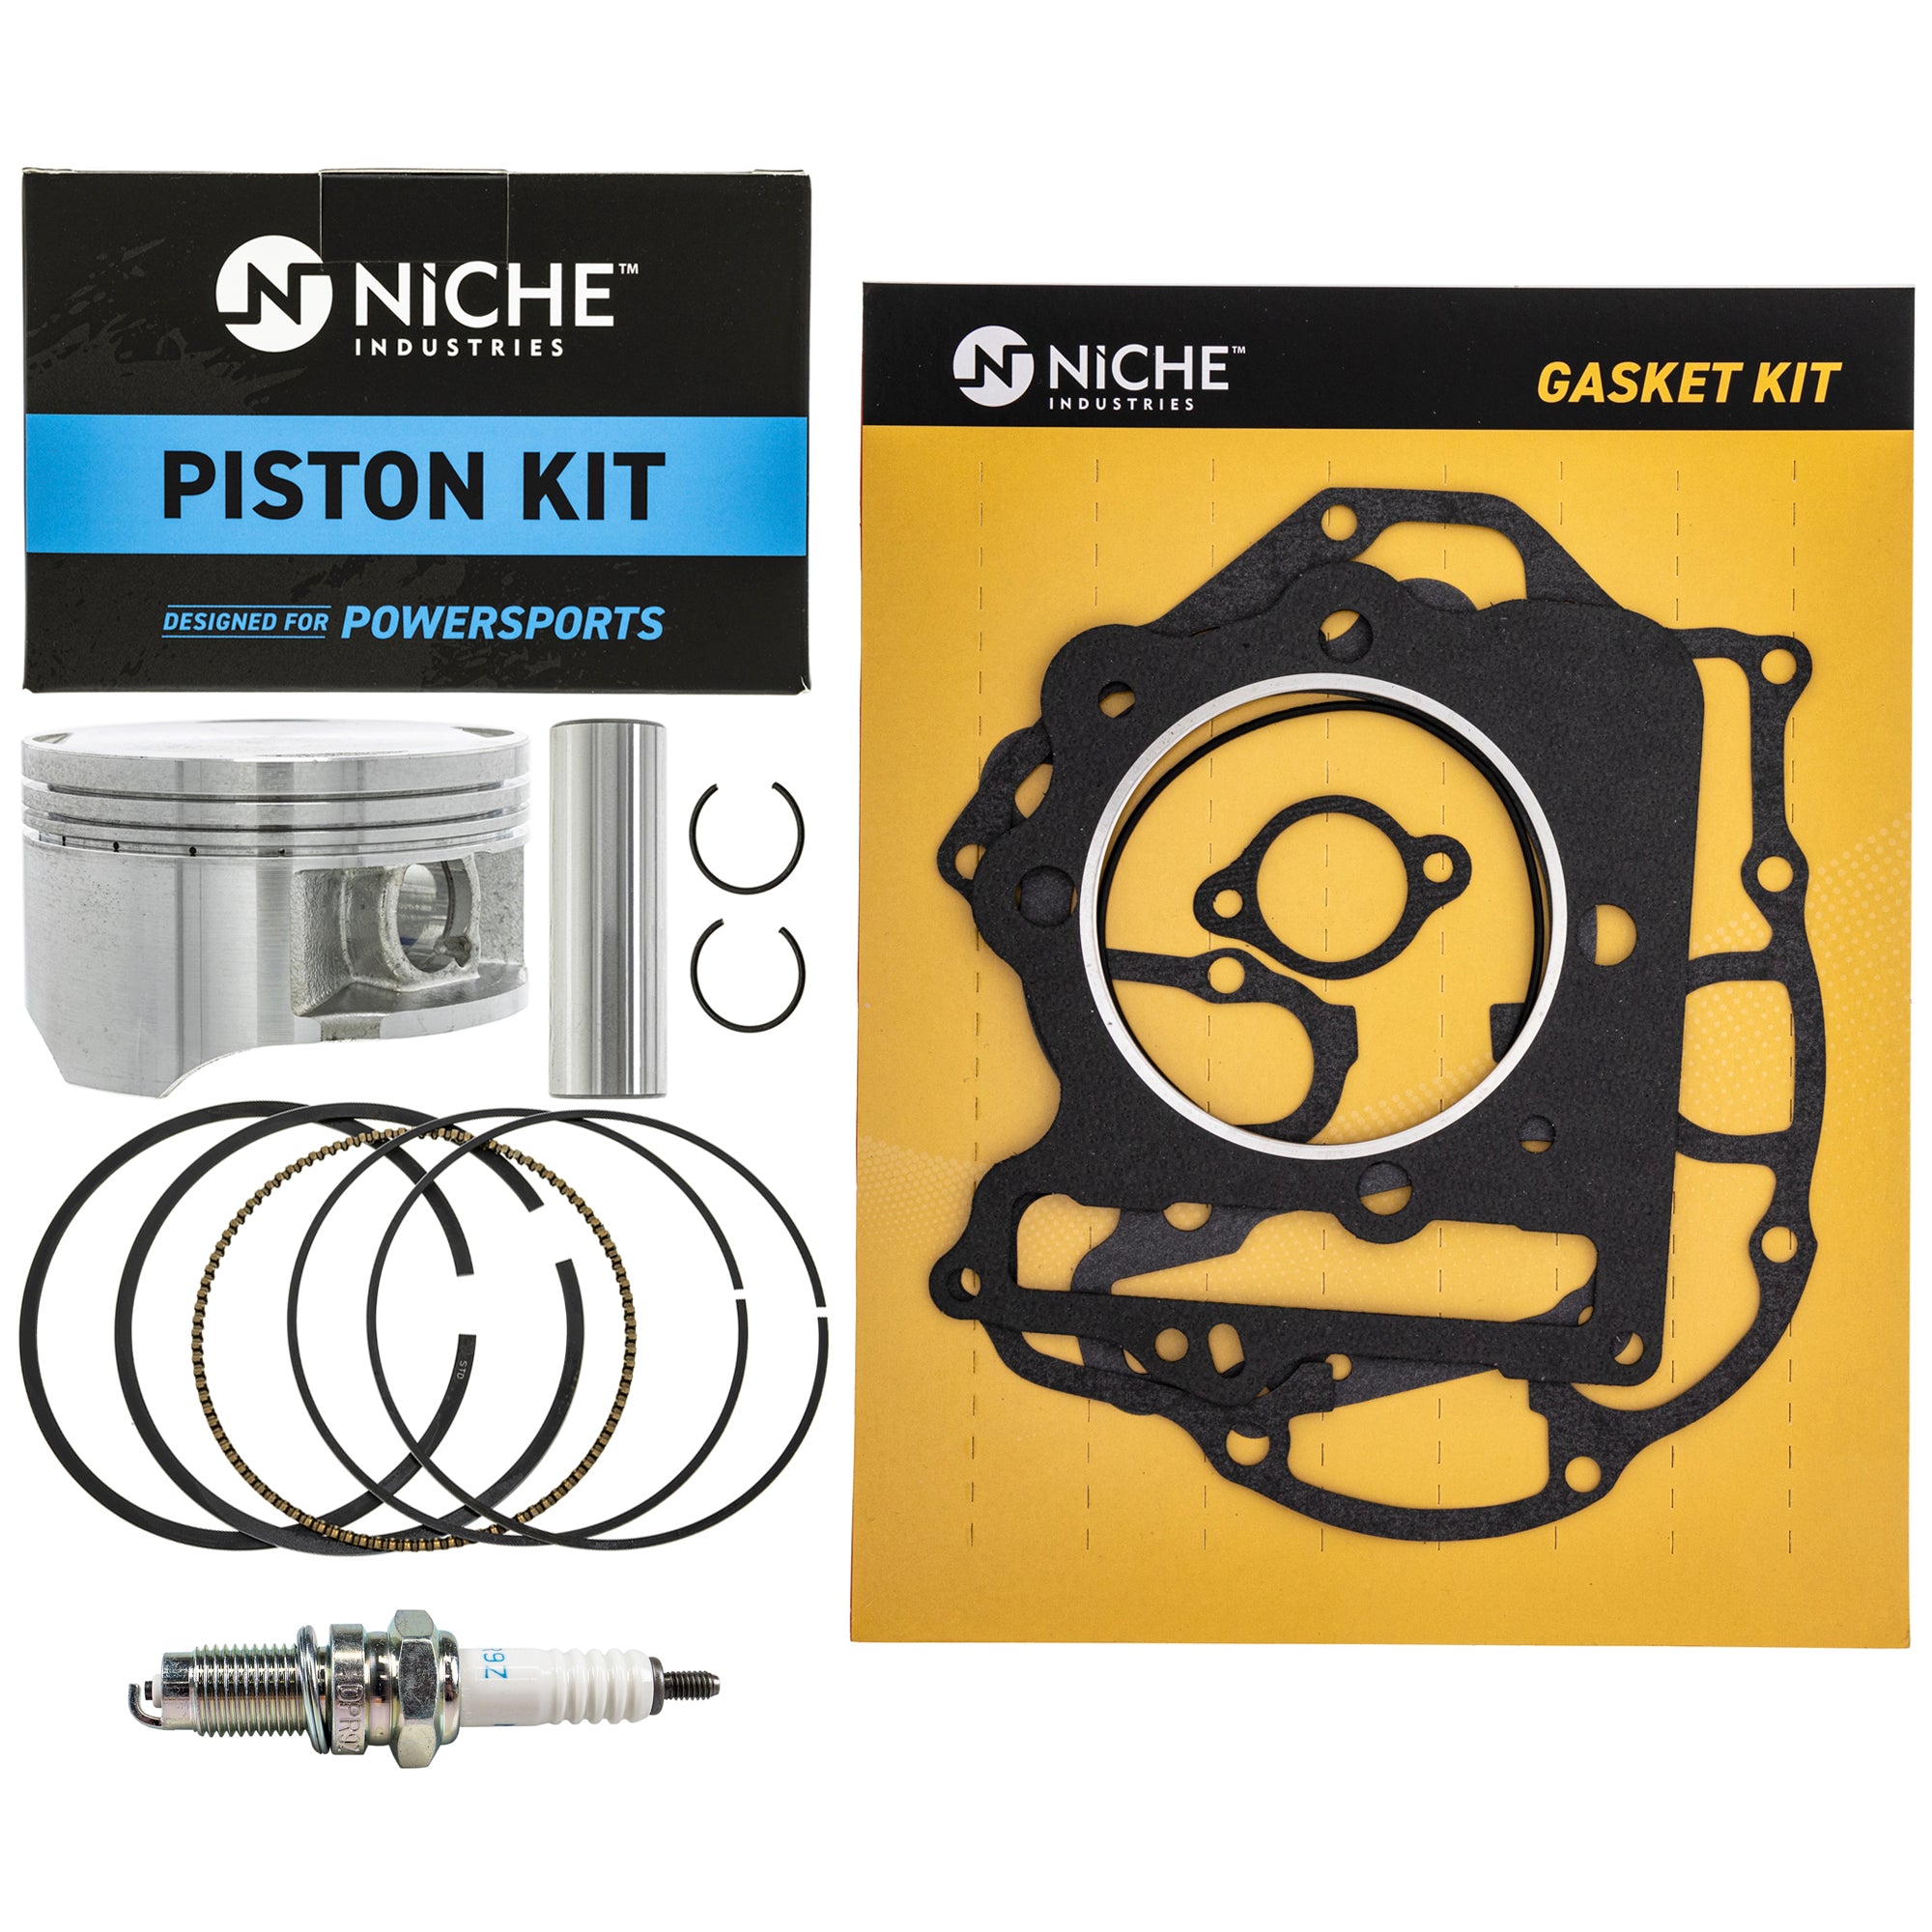 Gasket Piston Ring Spark Plug Kit for zOTHER Honda XR400R TRX400 SporTrax 98061-59616 NICHE MK1001220